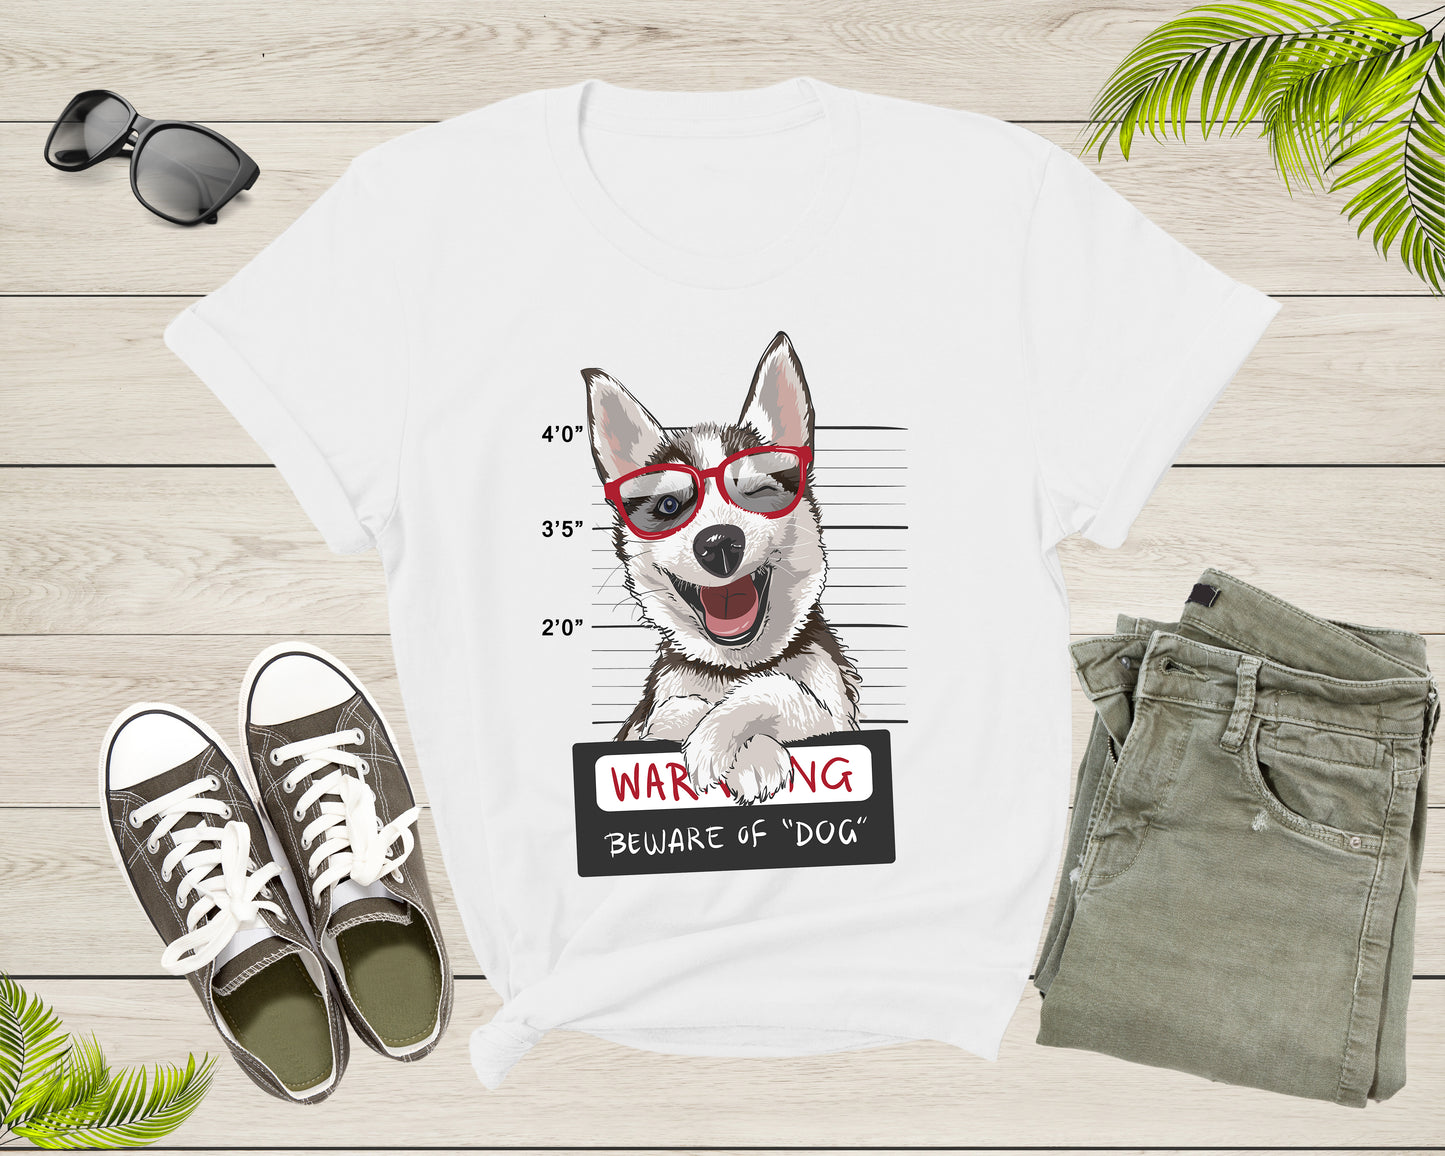 Warning Be Aware of Dog Husky Cute Eskimo Dog Puppy Pet Dog T-Shirt Dog Lover Owner Gift T Shirt for Men Women Boys Girls Teens Tshirt